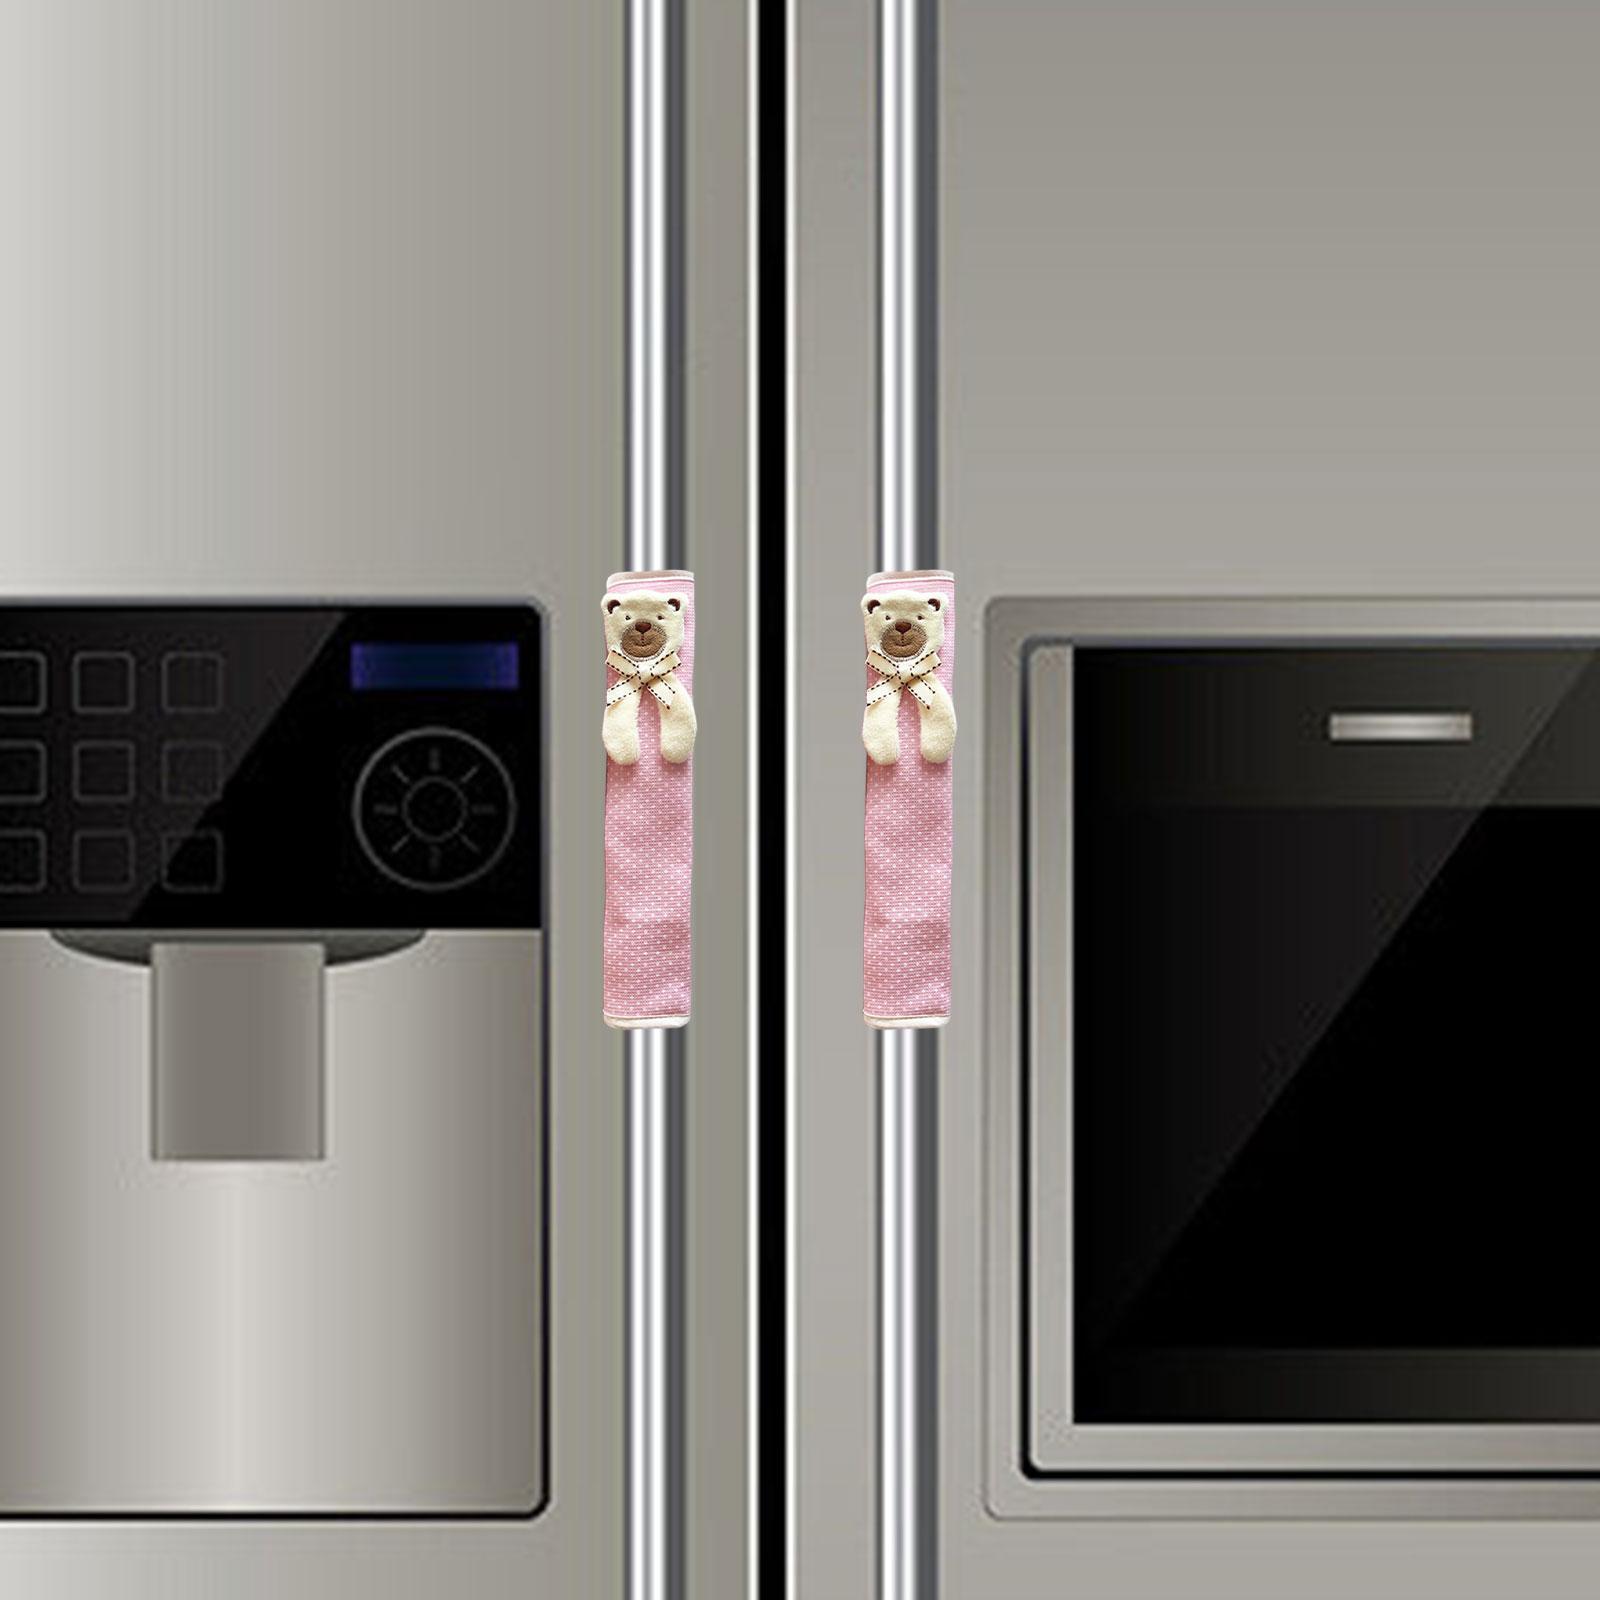 2x Refrigerator Door Handle Covers for Kitchen Appliances Decor